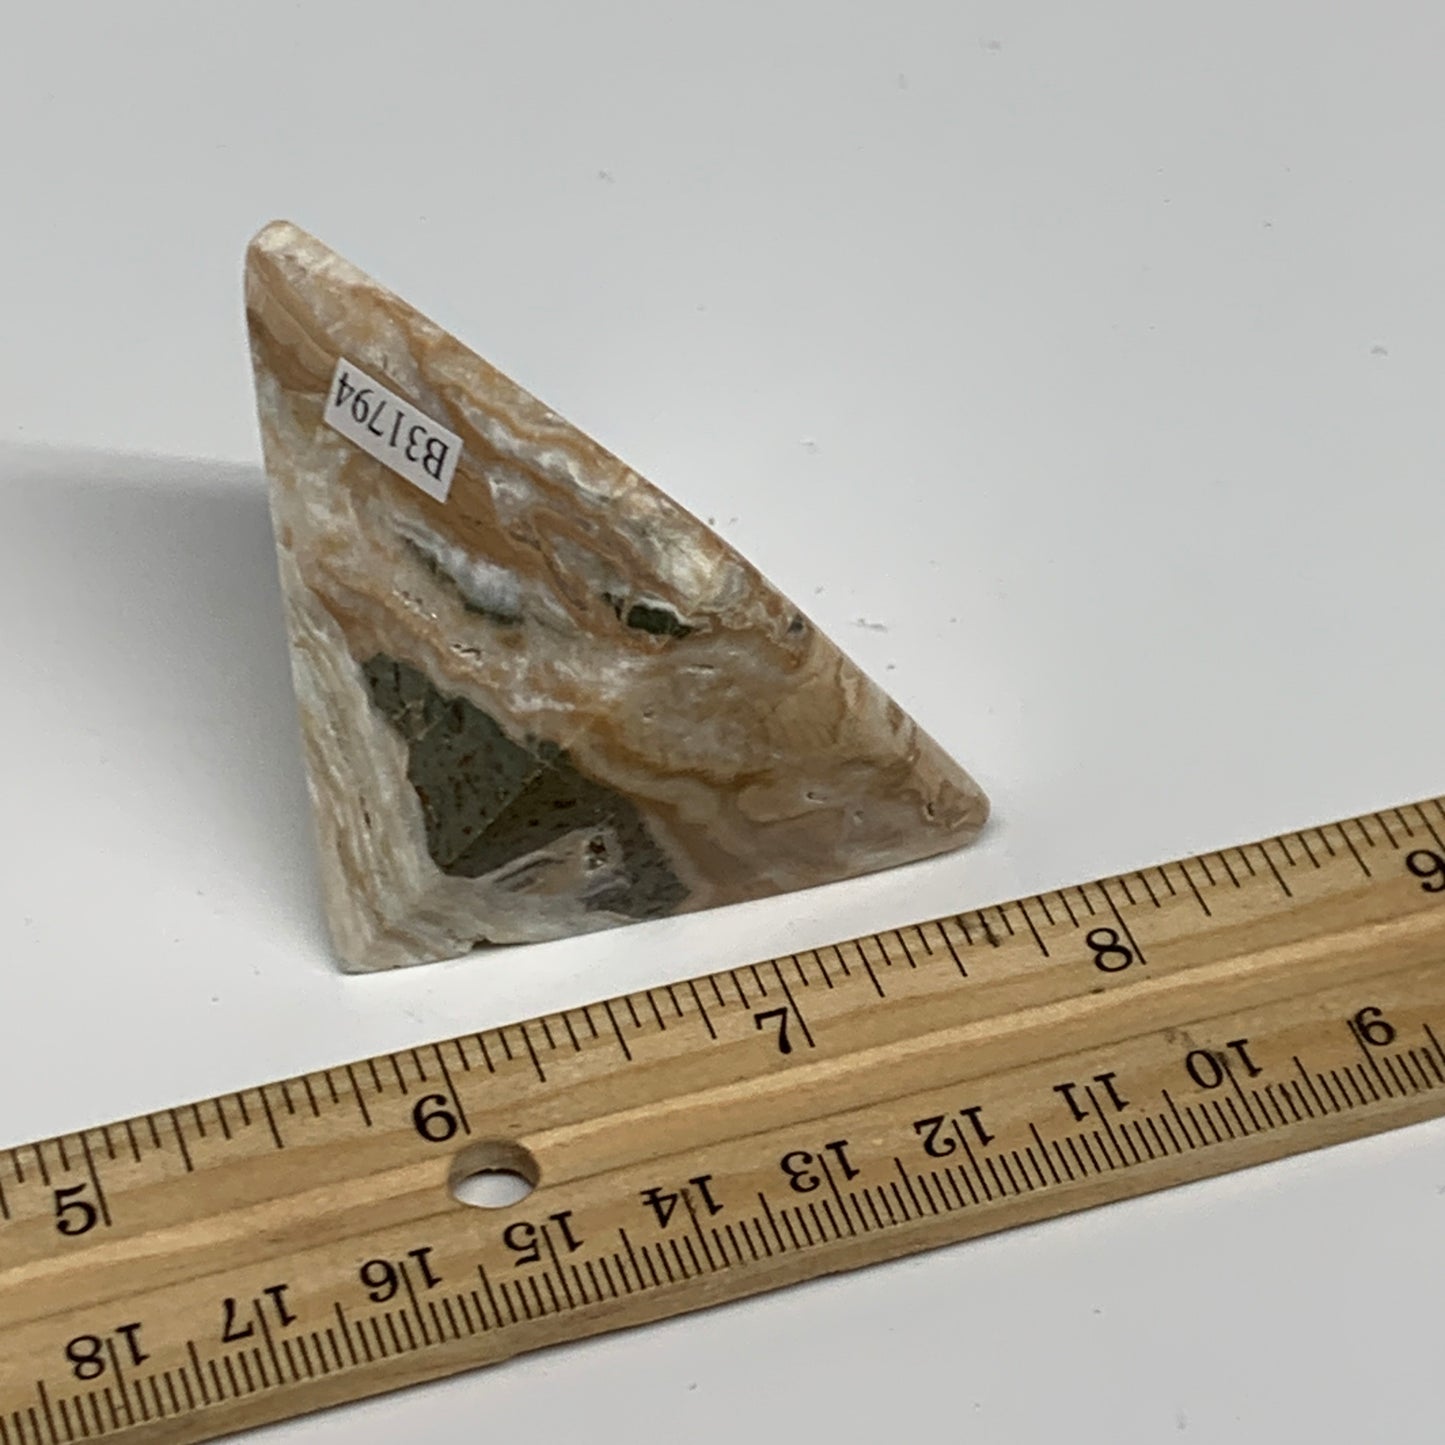 114g, 1.6"x2"x1.9", Caribbean Calcite Pyramid Gemstone, Crystal, B31794